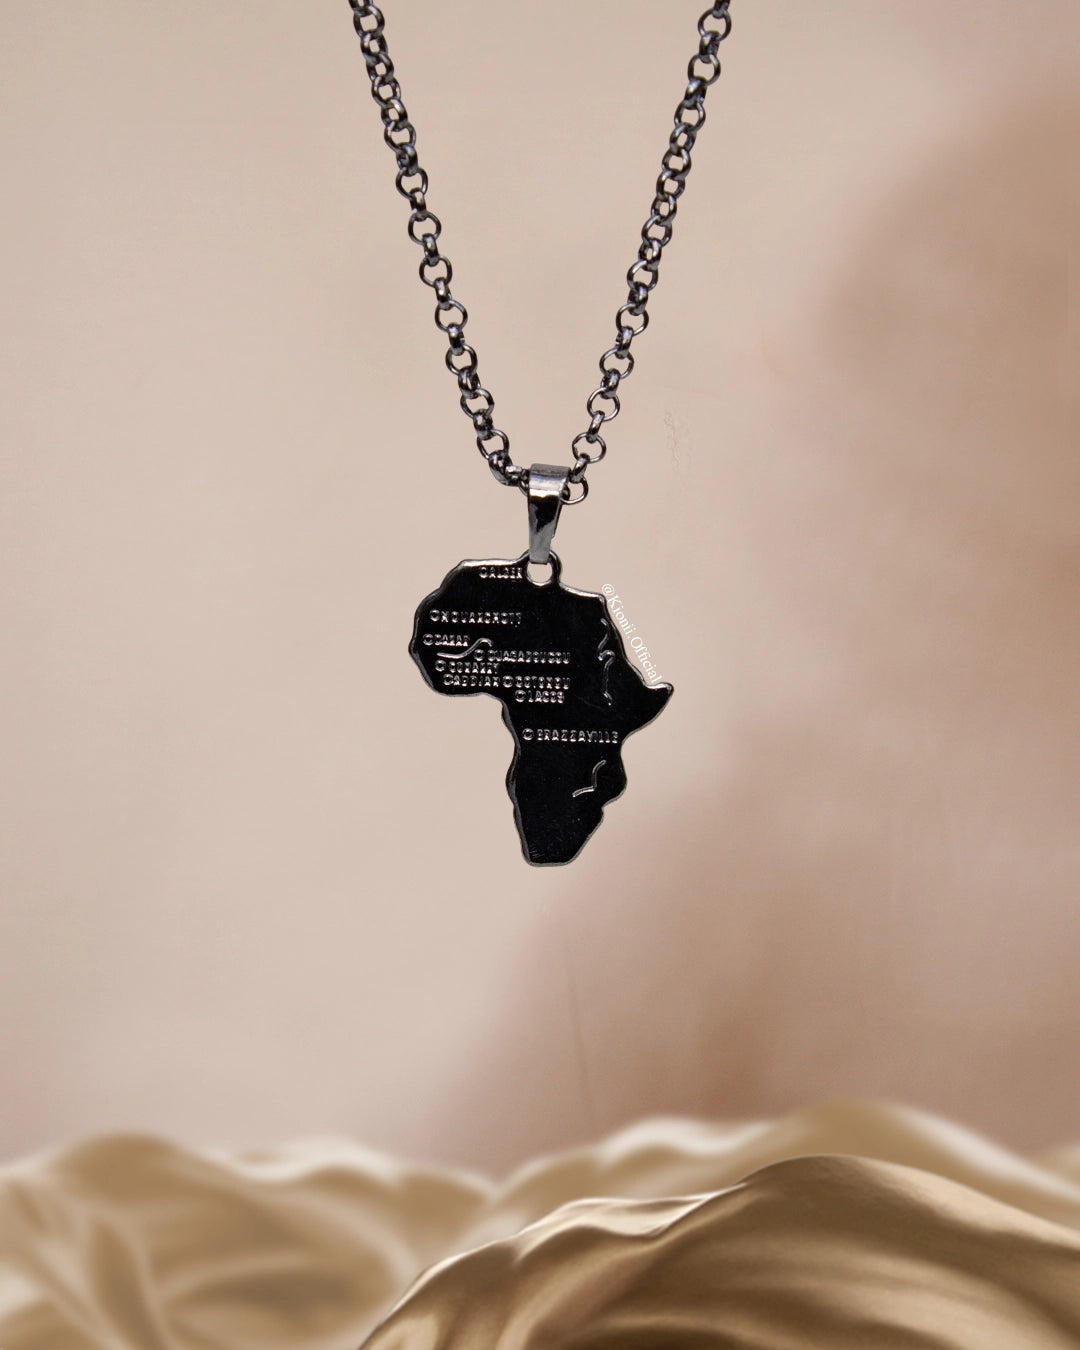 African Amethyst Gemstone 925 Sterling Silver Necklace, खरे चांदी का गले का  हार - Art Palace, Jaipur | ID: 2851920901133